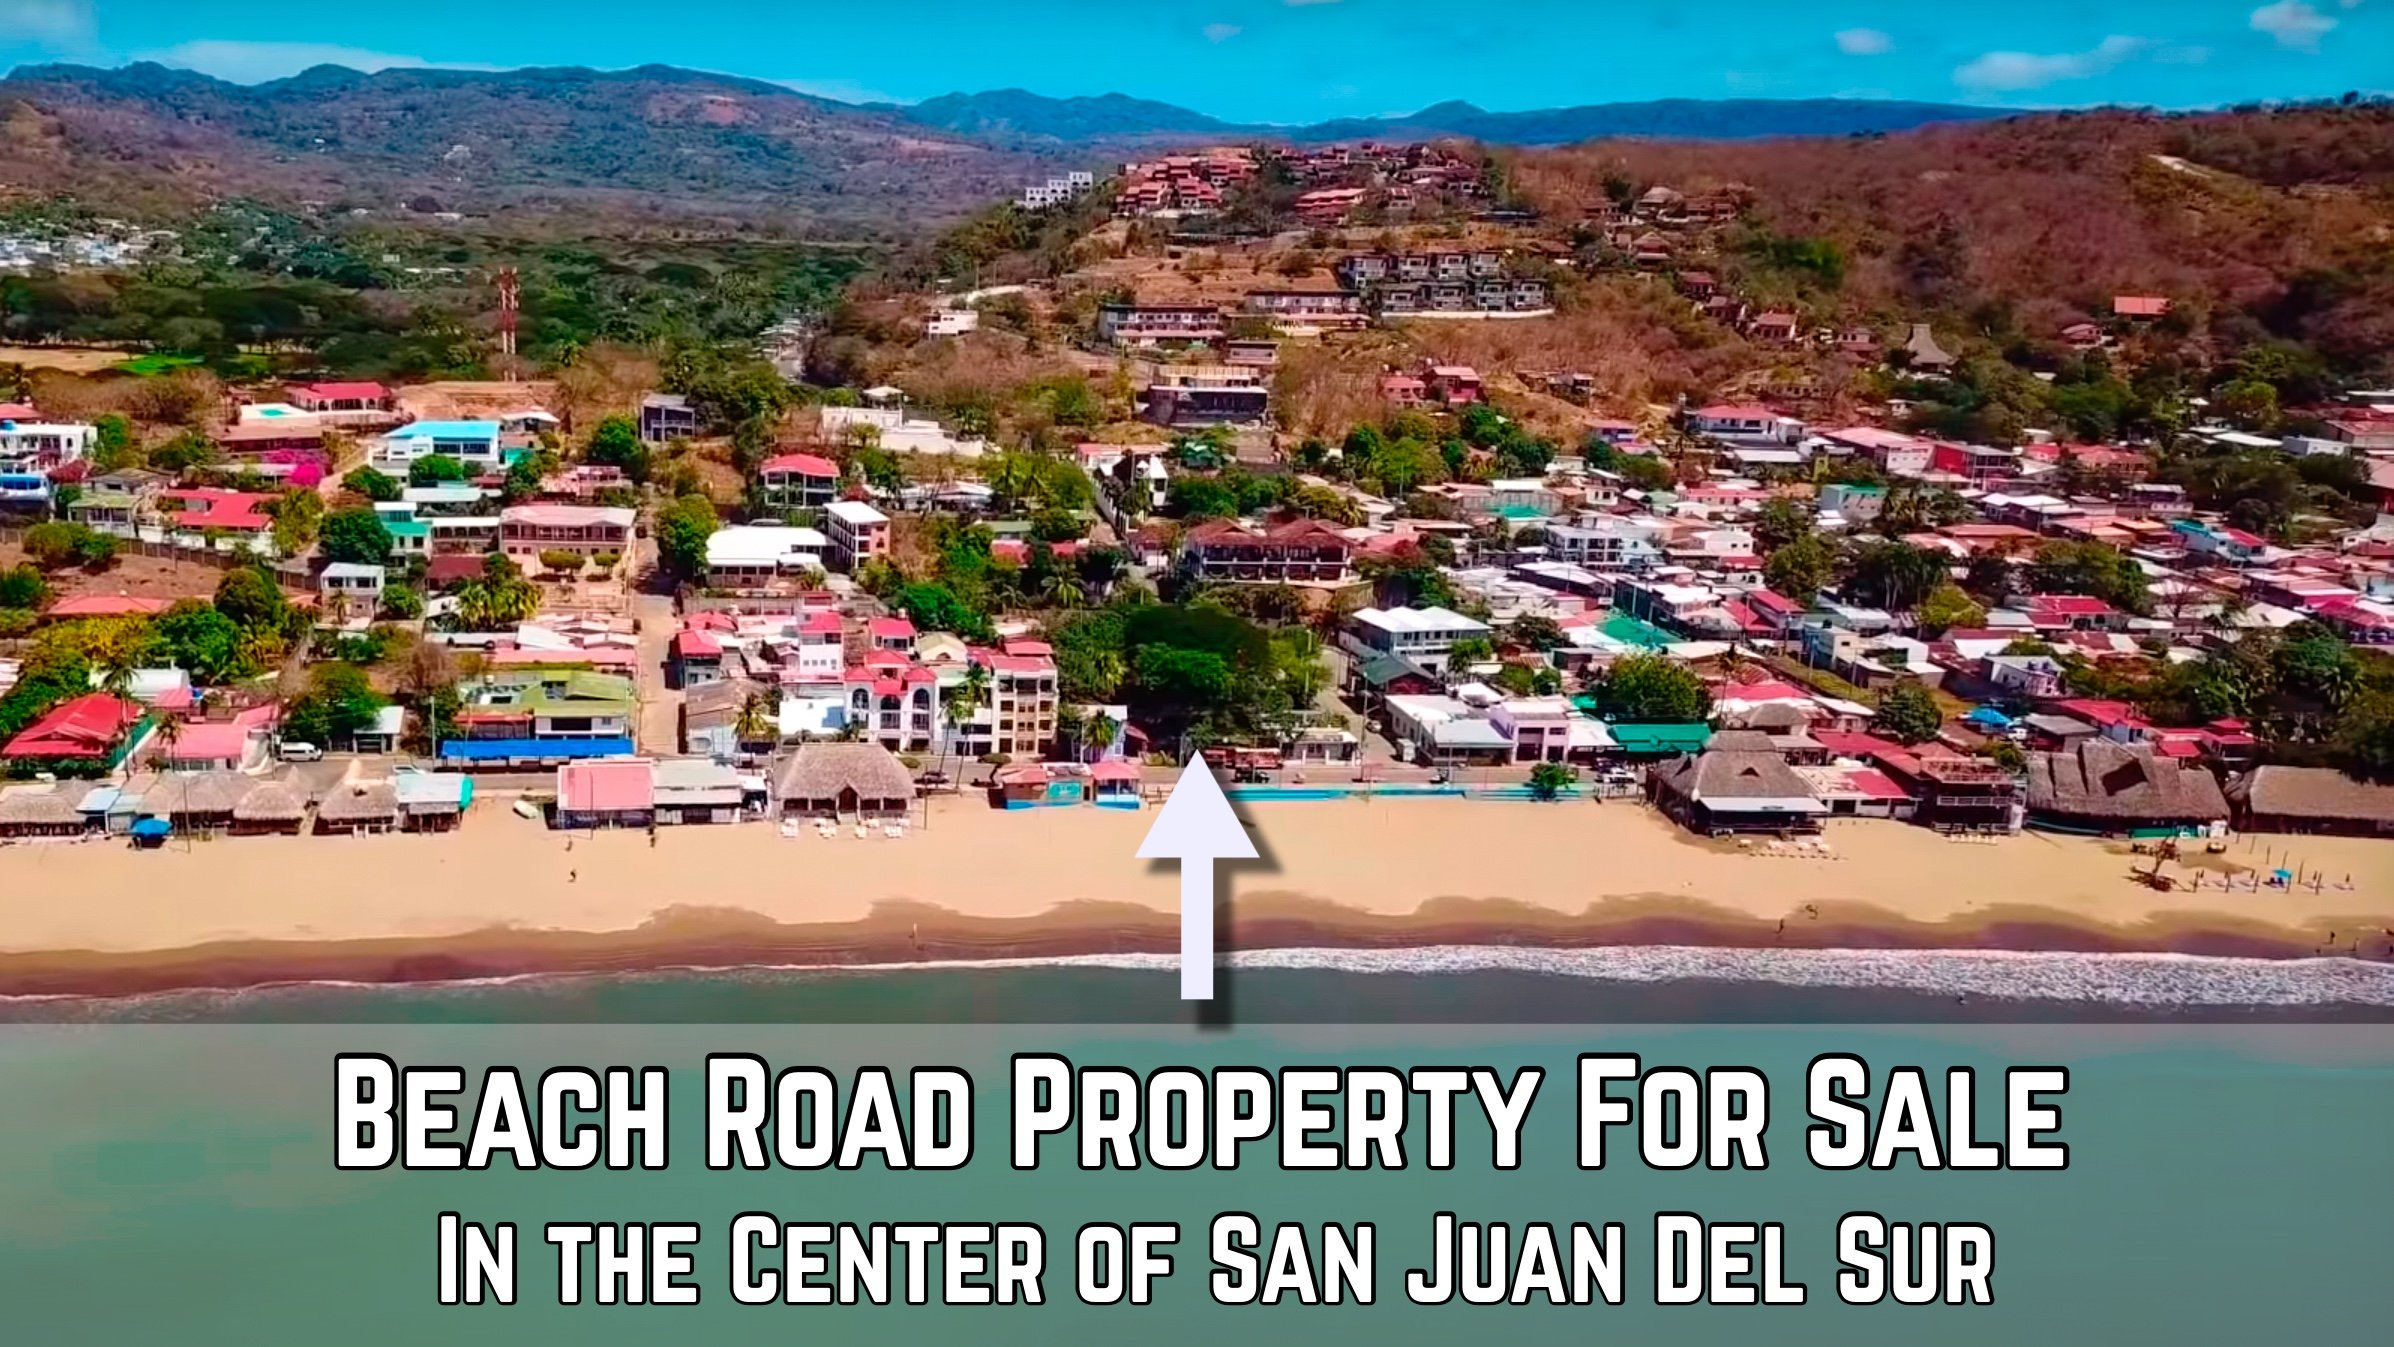 Beach Road Property For Sale San Juan Del Sur Youtube.jpg